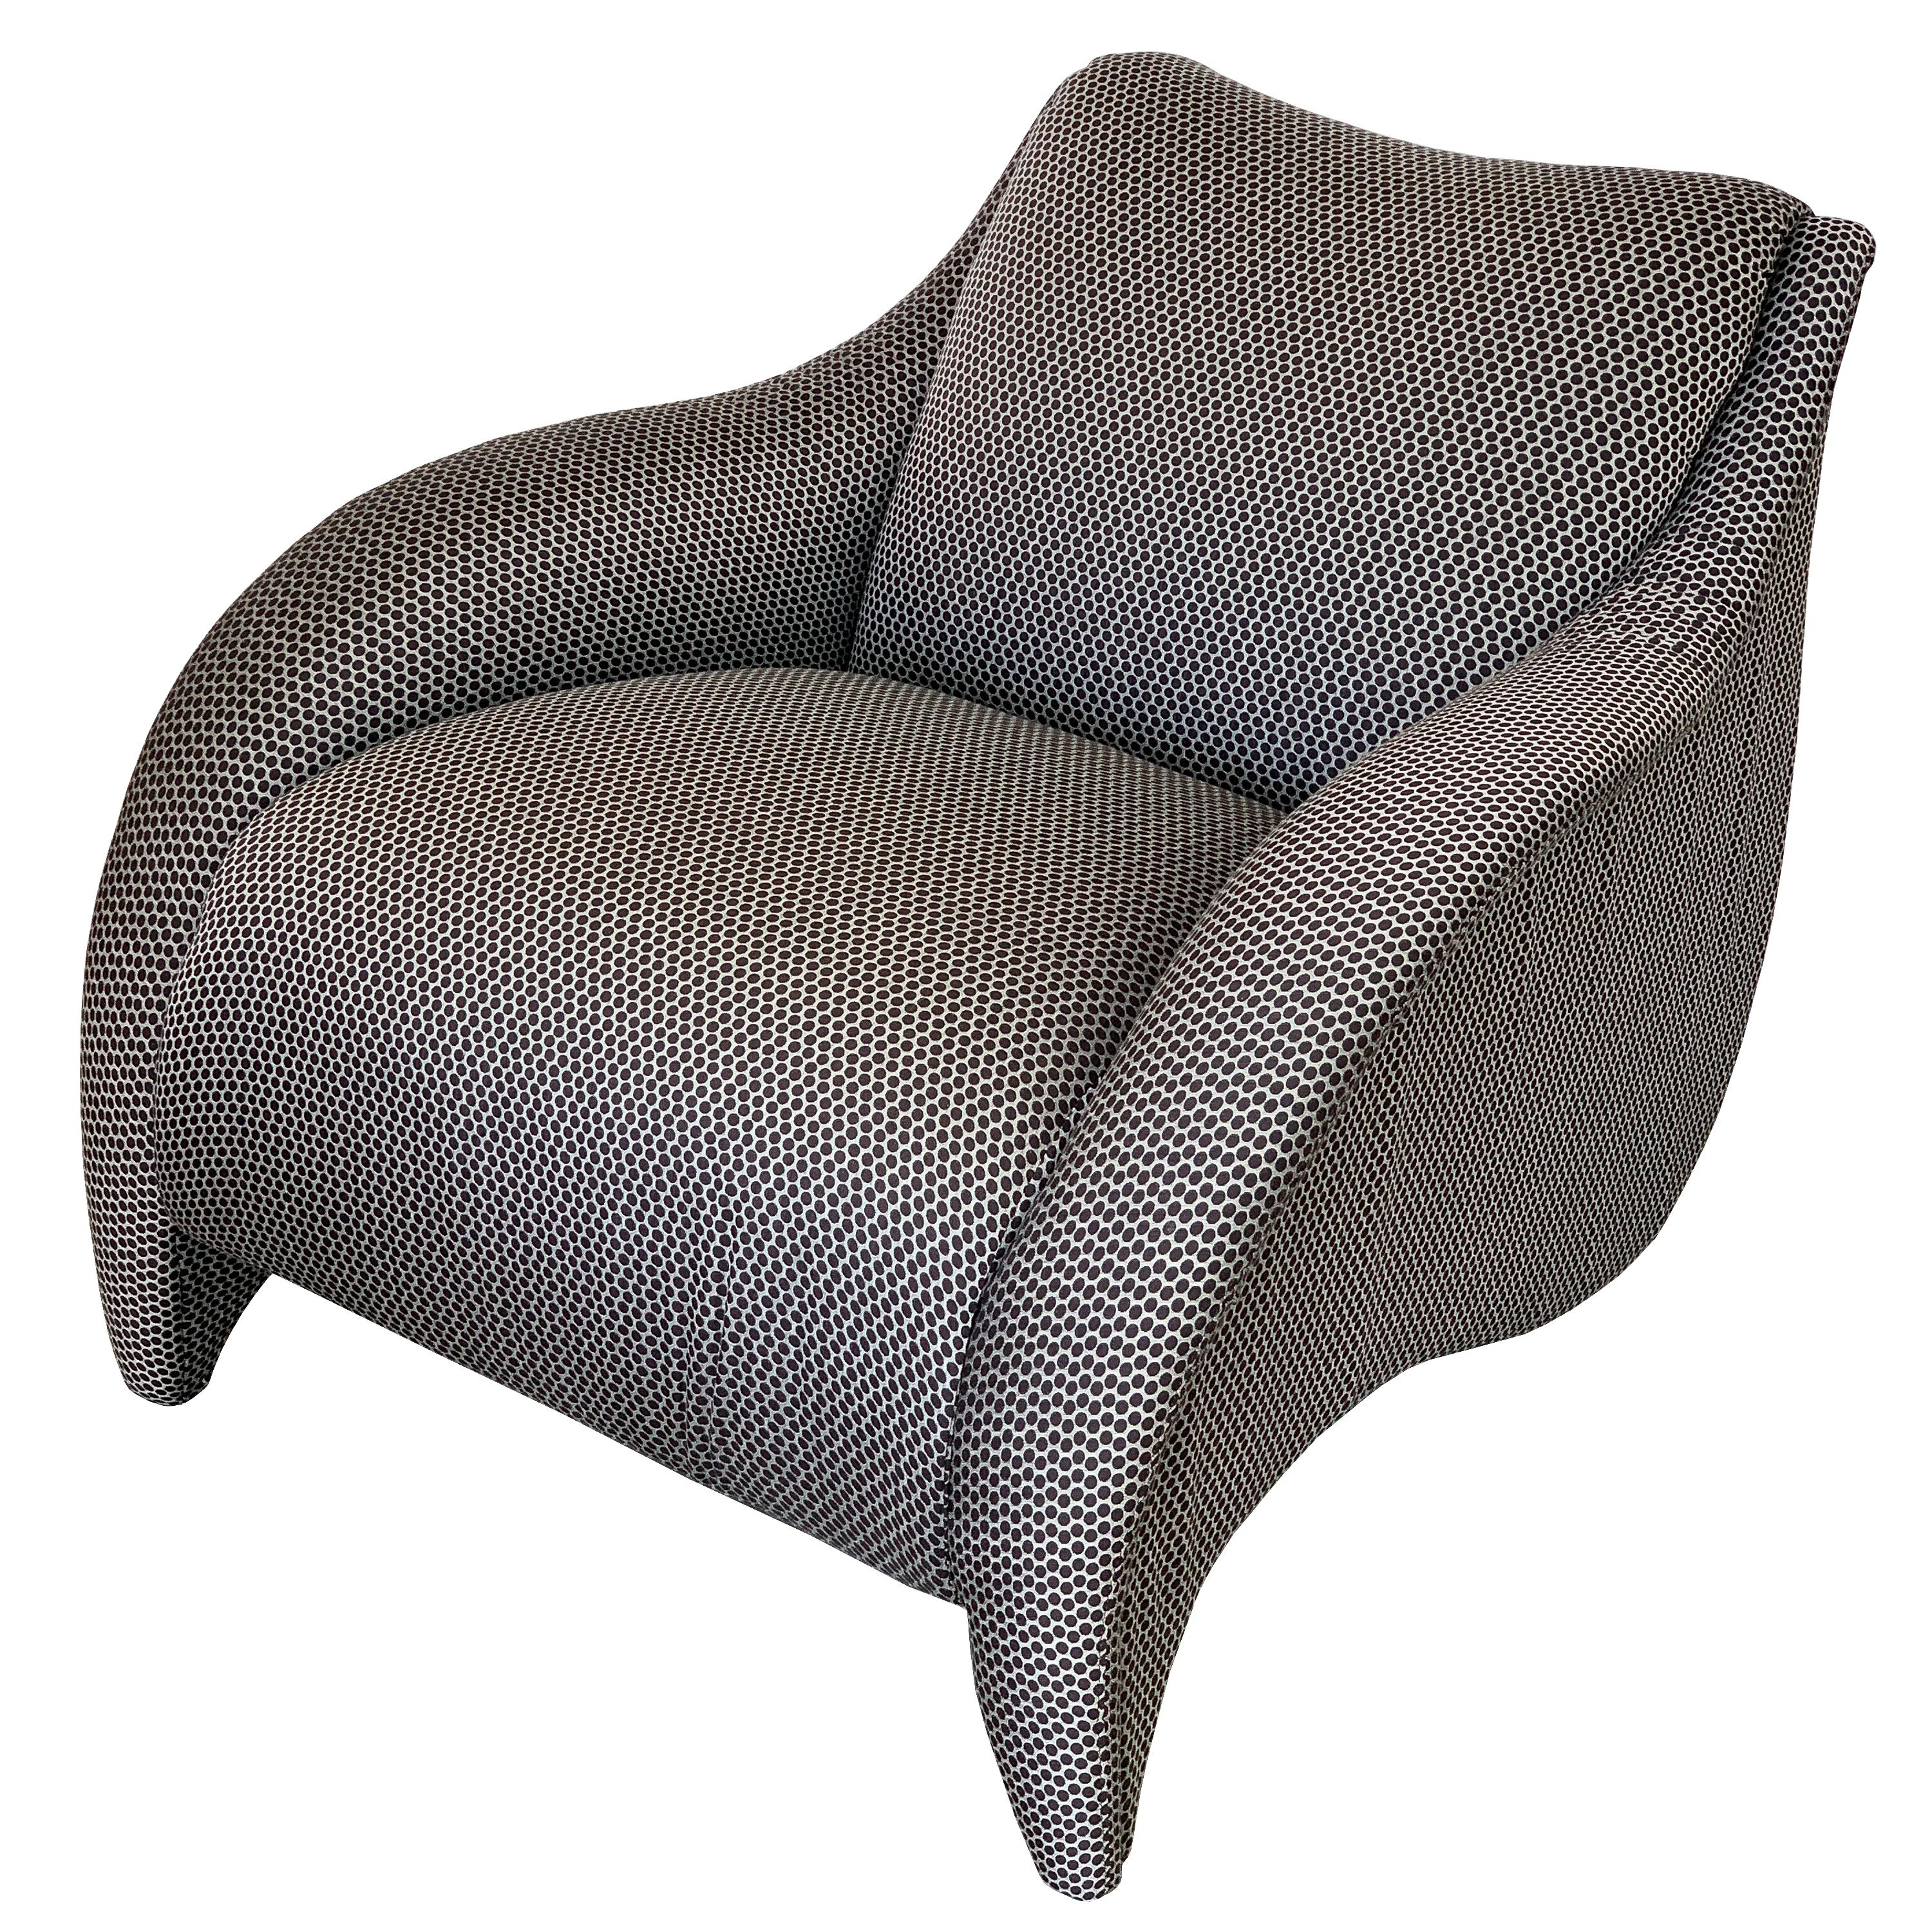 Vladimir Kagan Wave Lounge Chair for Directional